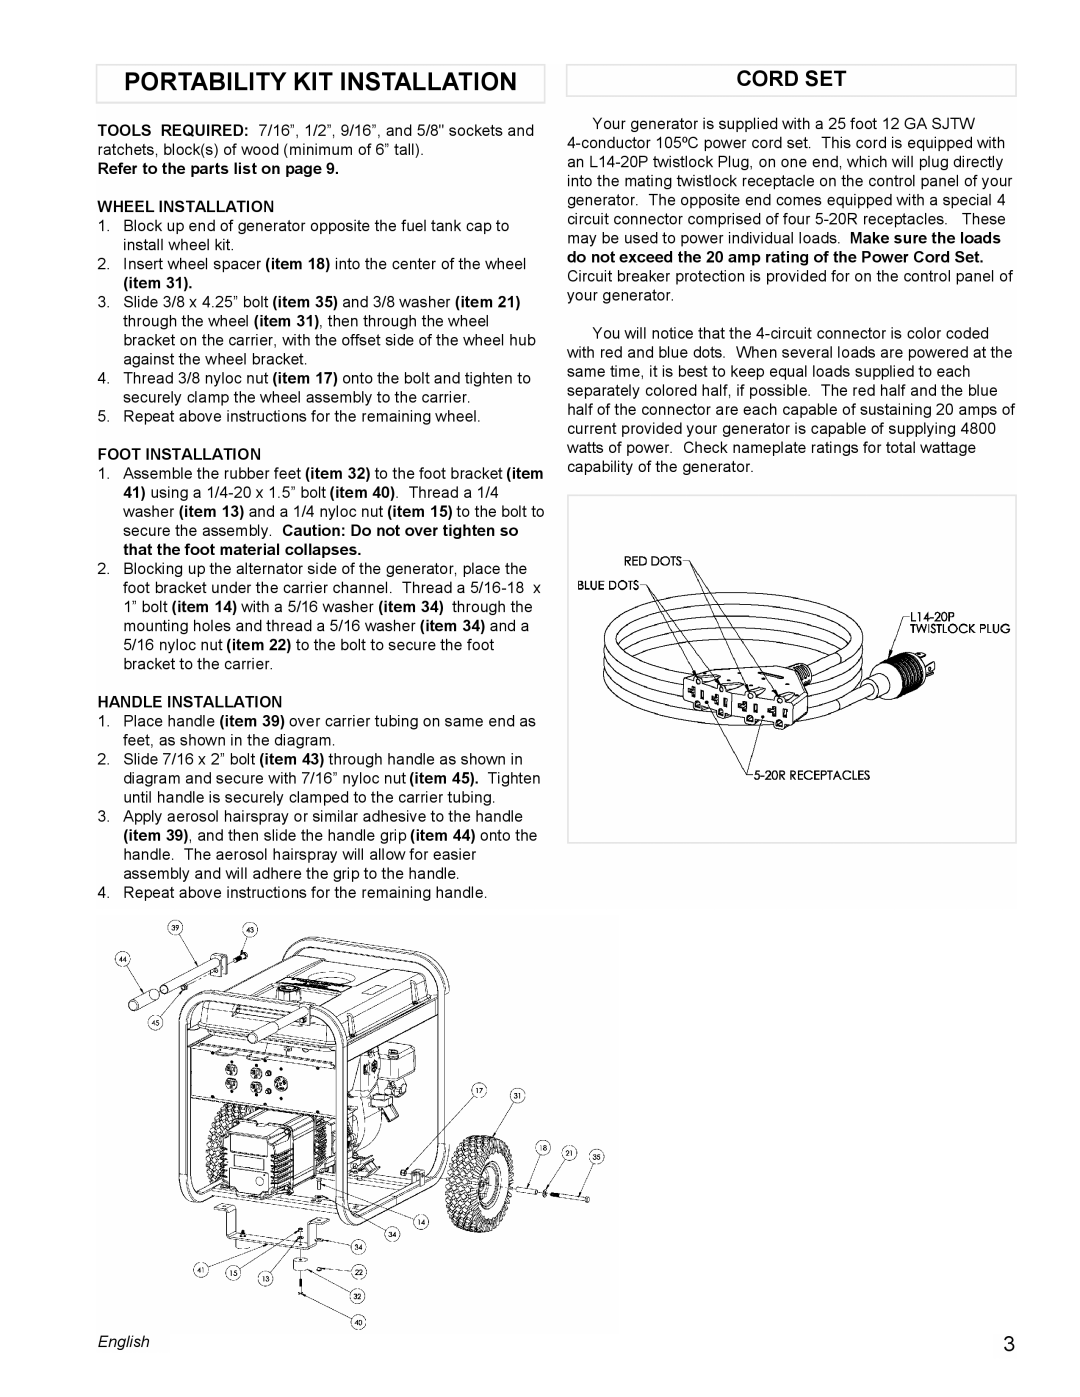 Powermate PL0525501 manual Portability Kit Installation, Cord Set, English 